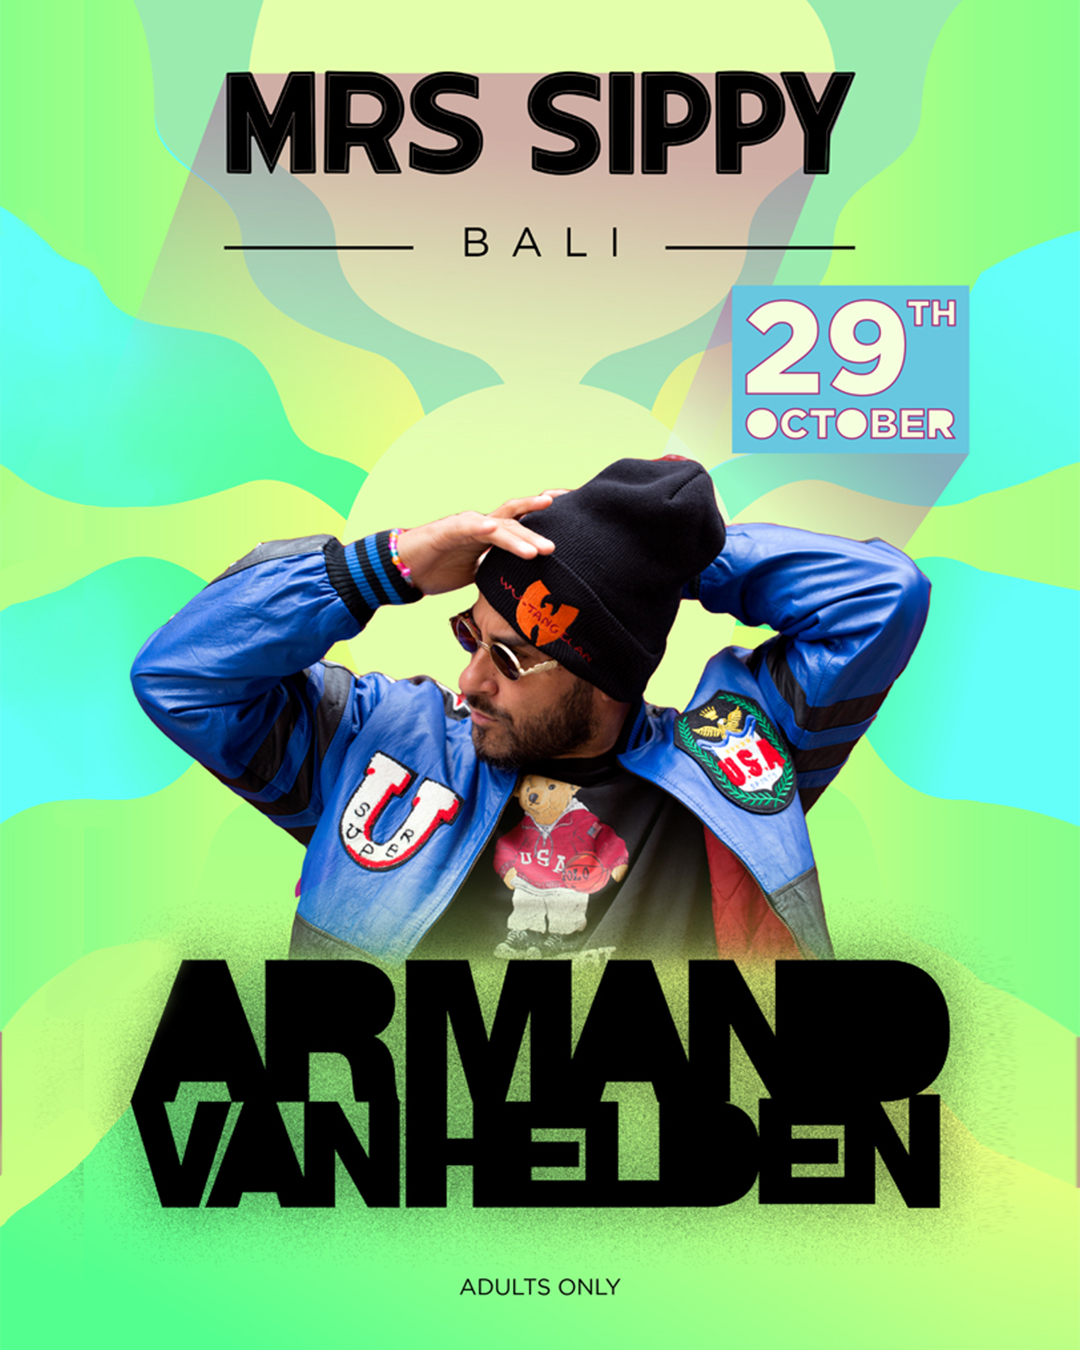 MRS SIPPY PRESENTS ARMAND VAN HELDEN – SATURDAY OCTOBER 29TH thumbnail image